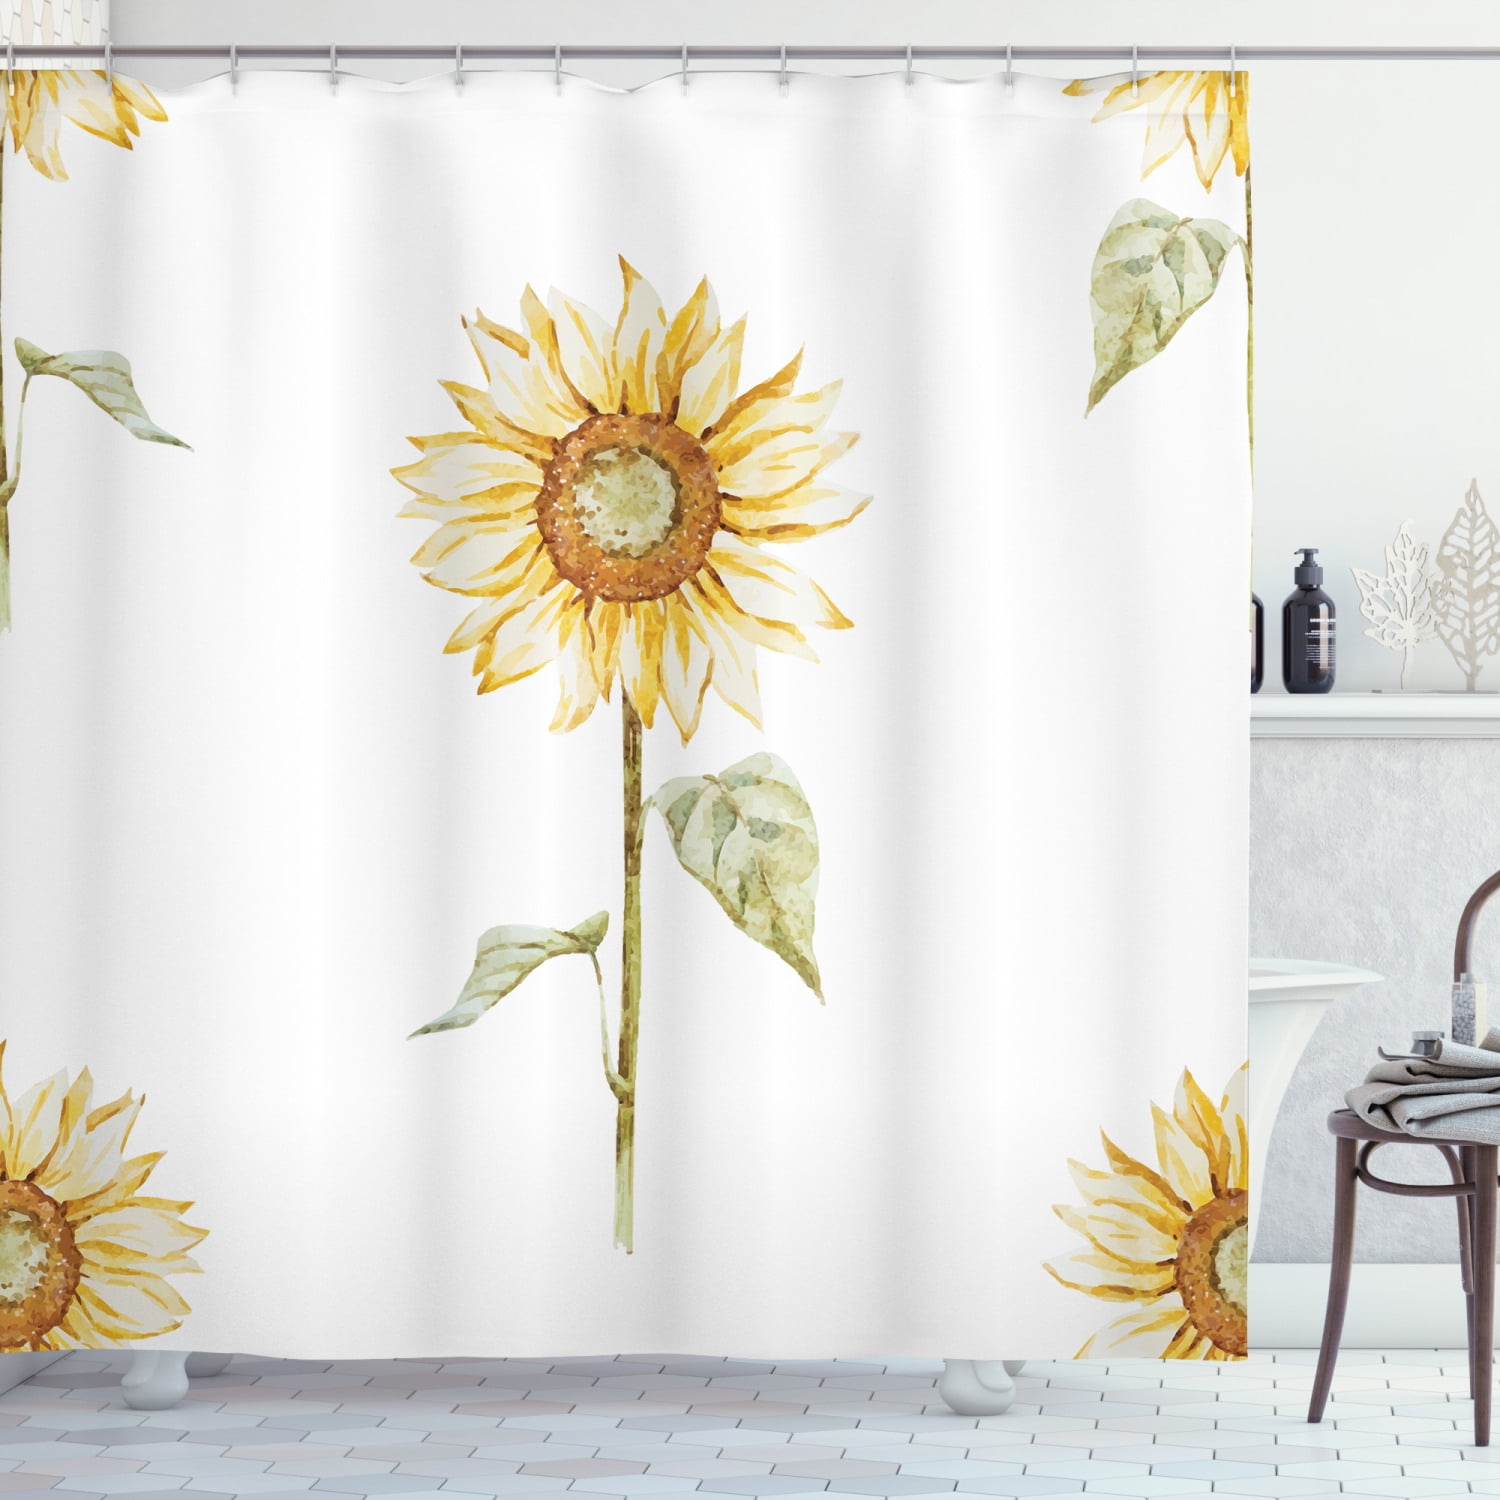 Details about   Spring Sunflower Field under Cloud Blue Sky Shower Curtain Set Bathroom Decor LB 